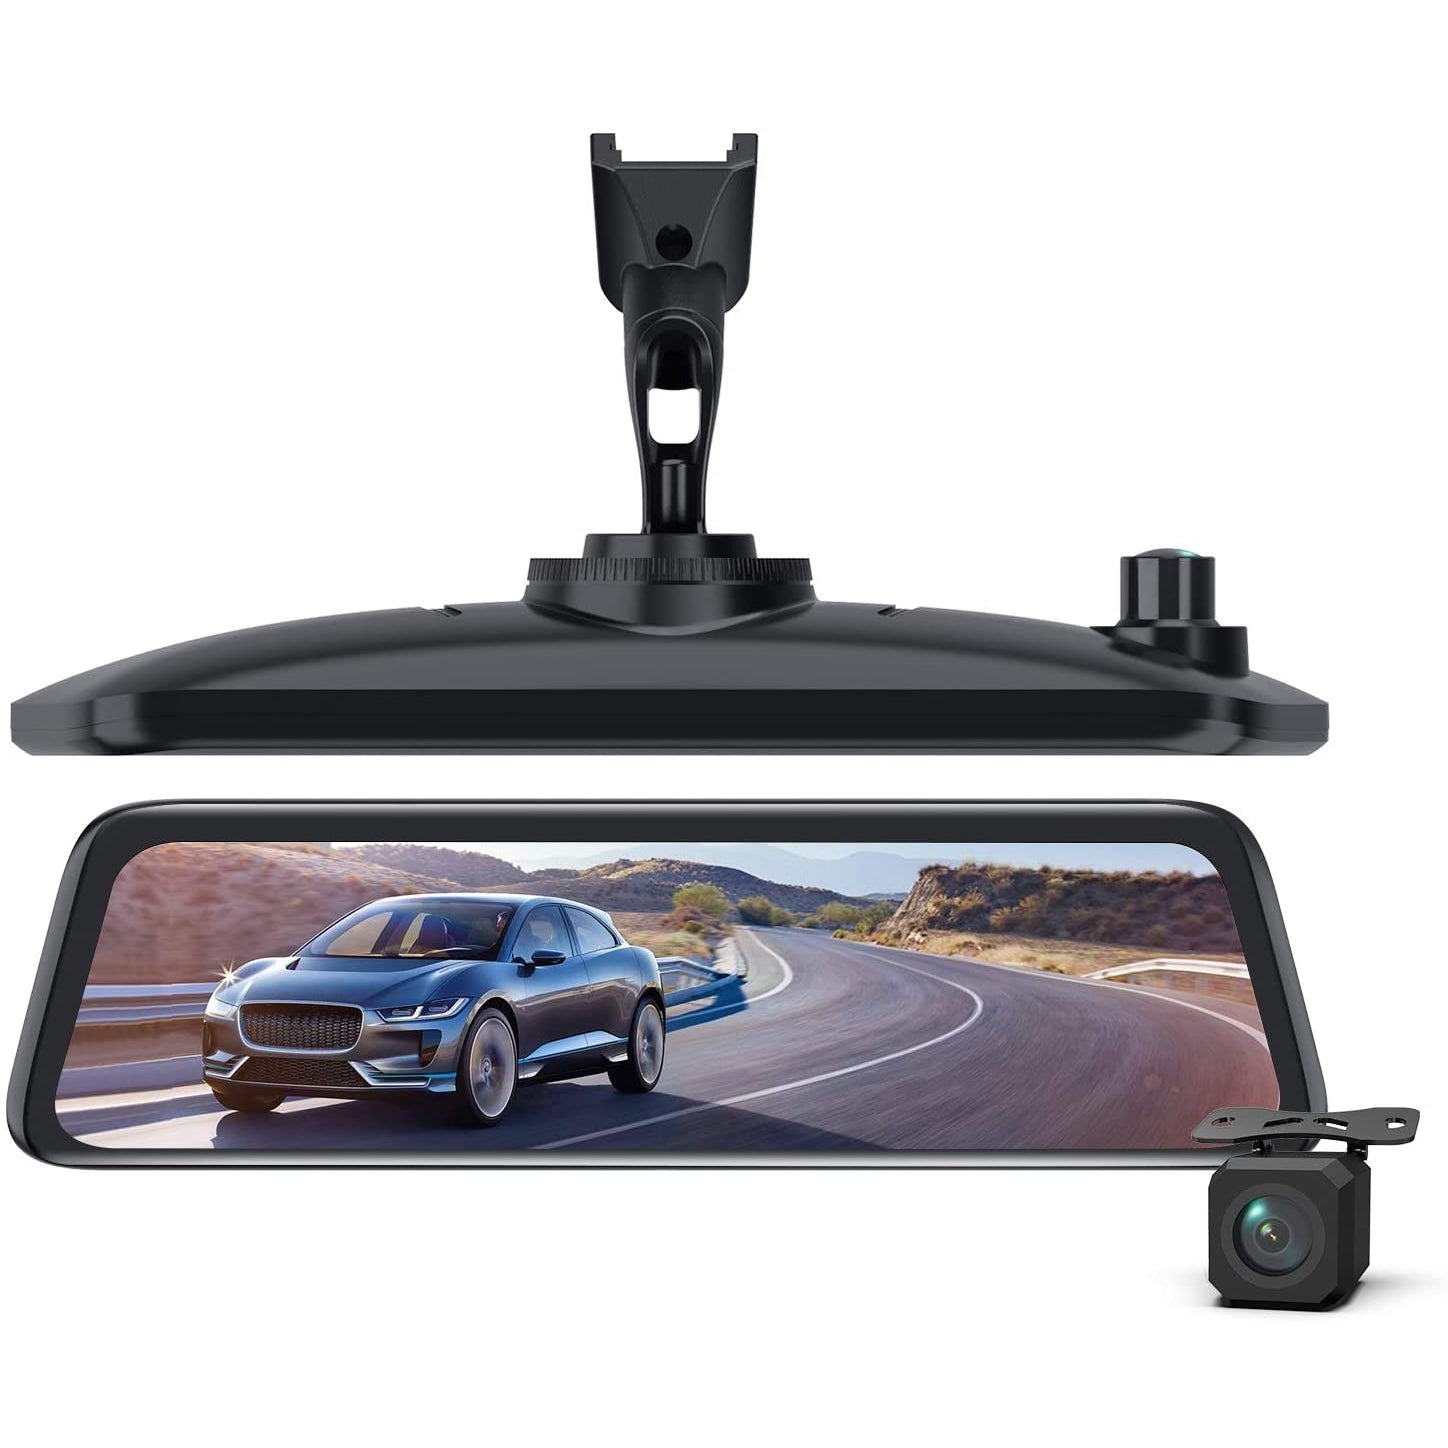 Auto-Vox V5 Pro Stream Media Mirror Dash Cam